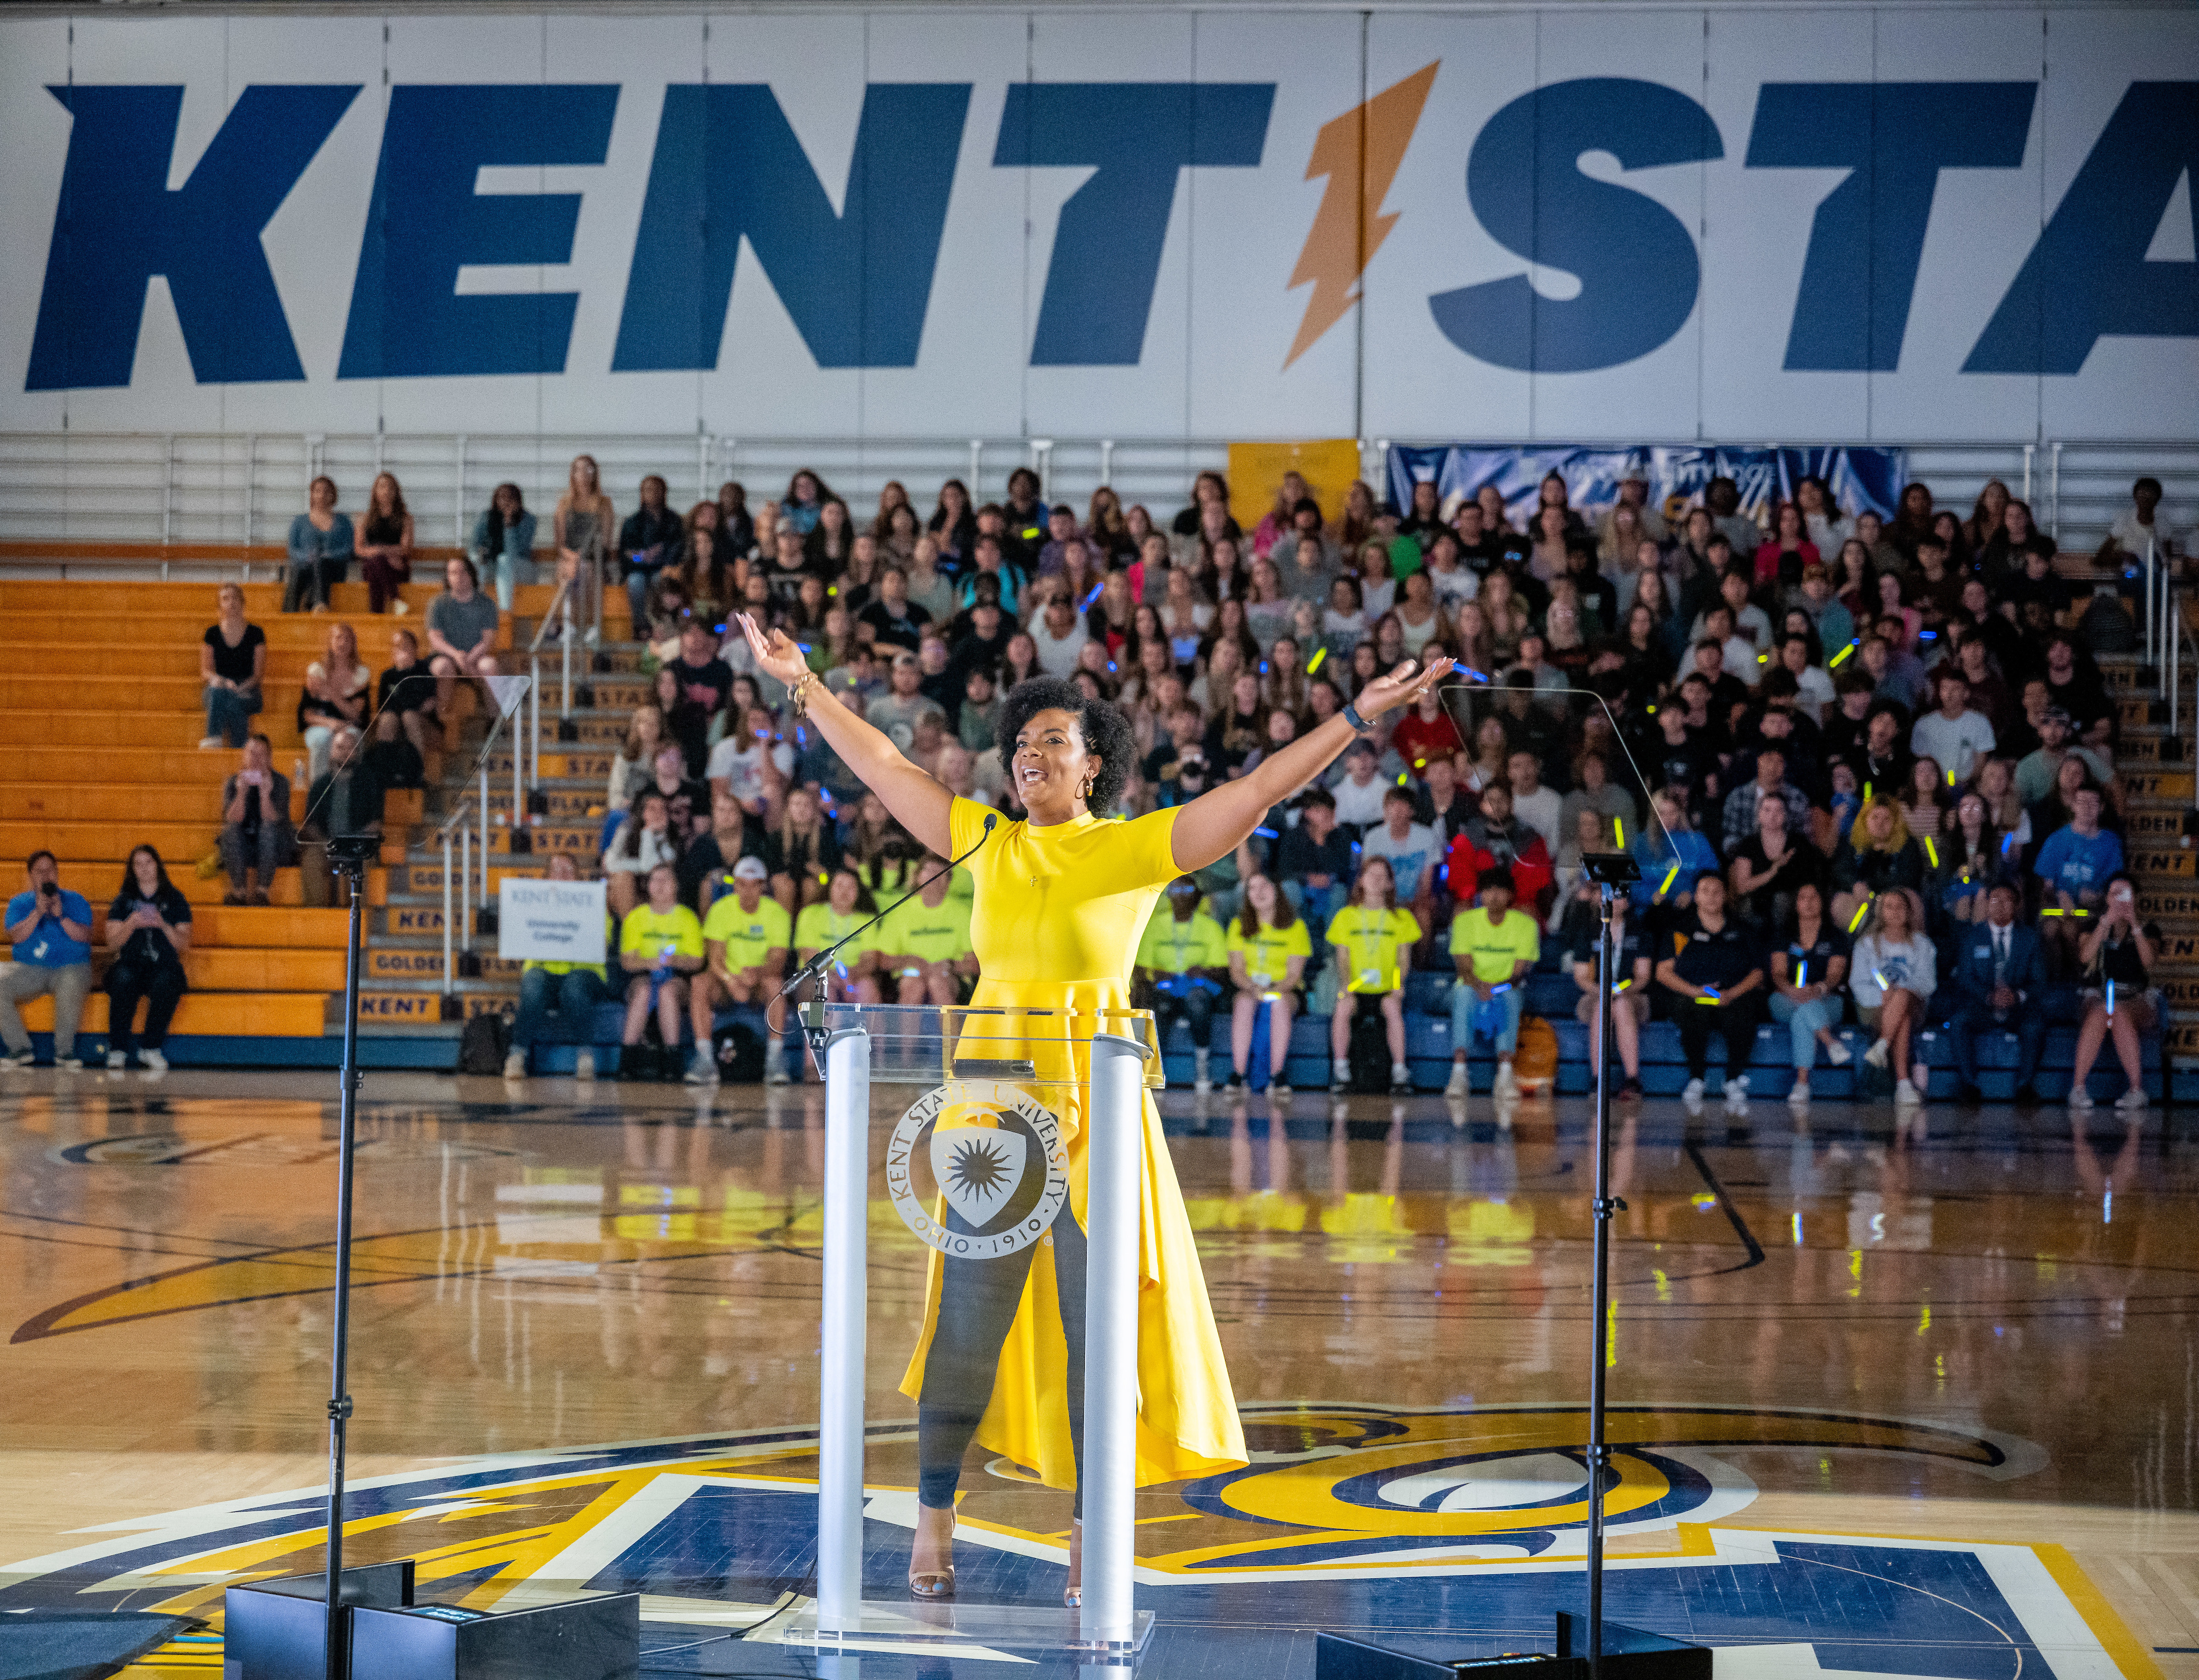 Kent State University 